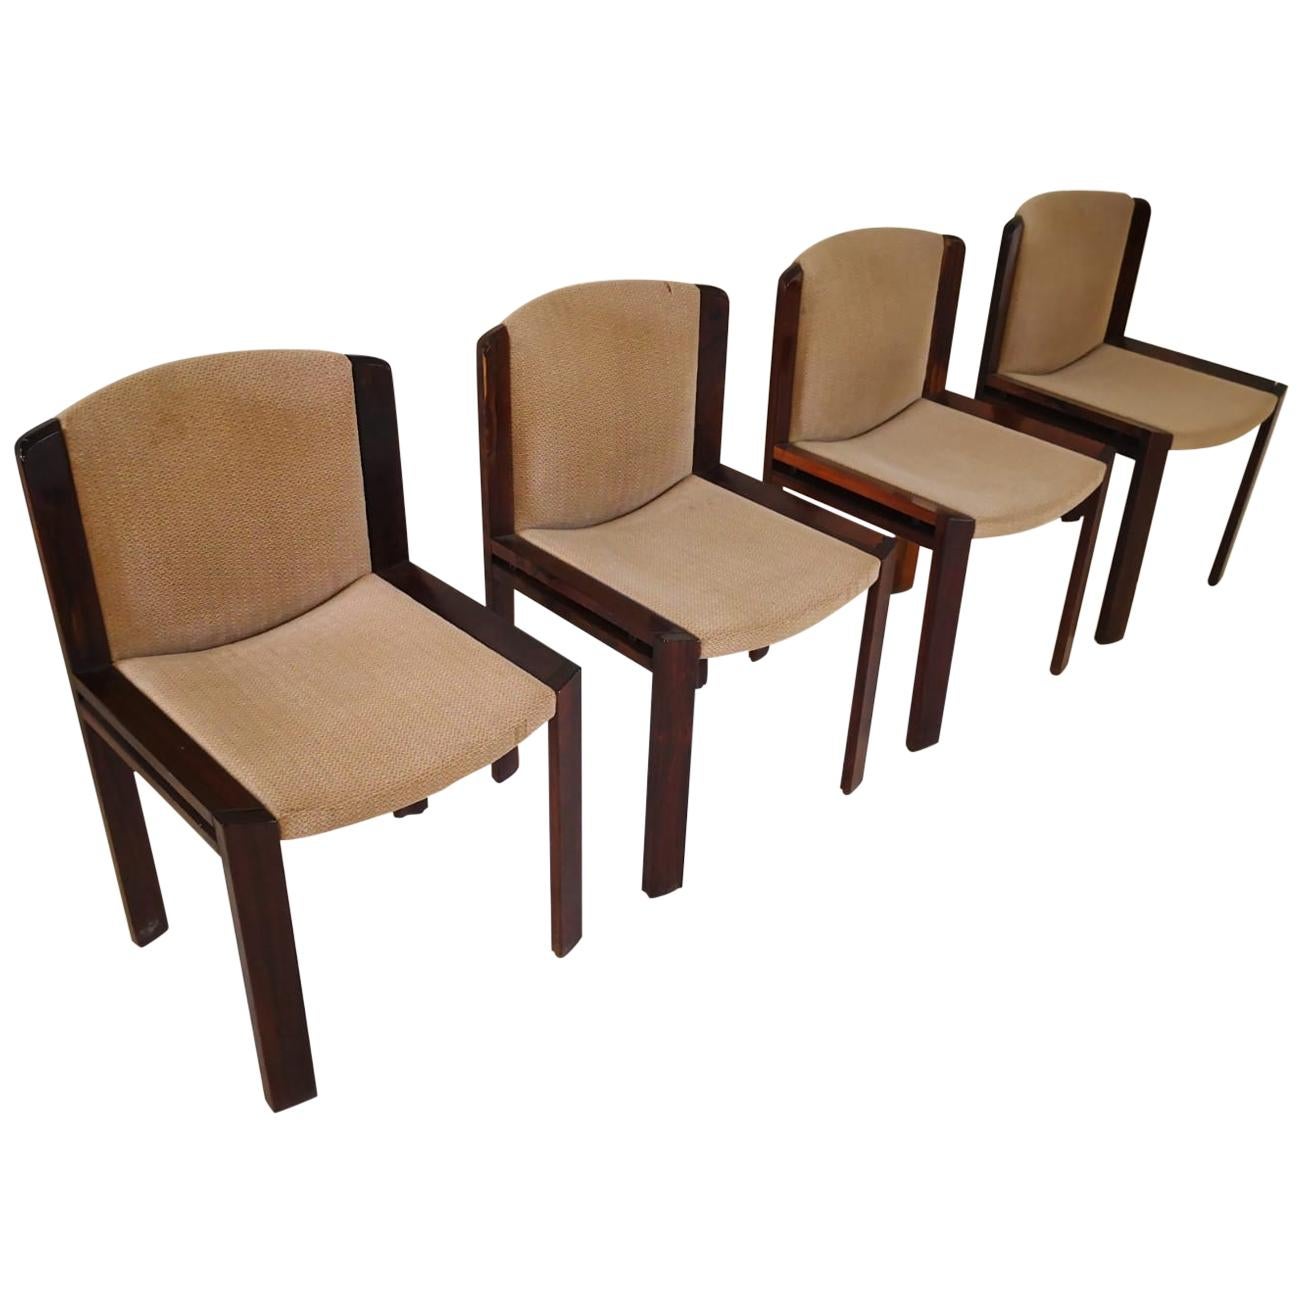 Mid-Century Modern Italian Set of 4 Chairs Model 300 by Joe Colombo, 1965